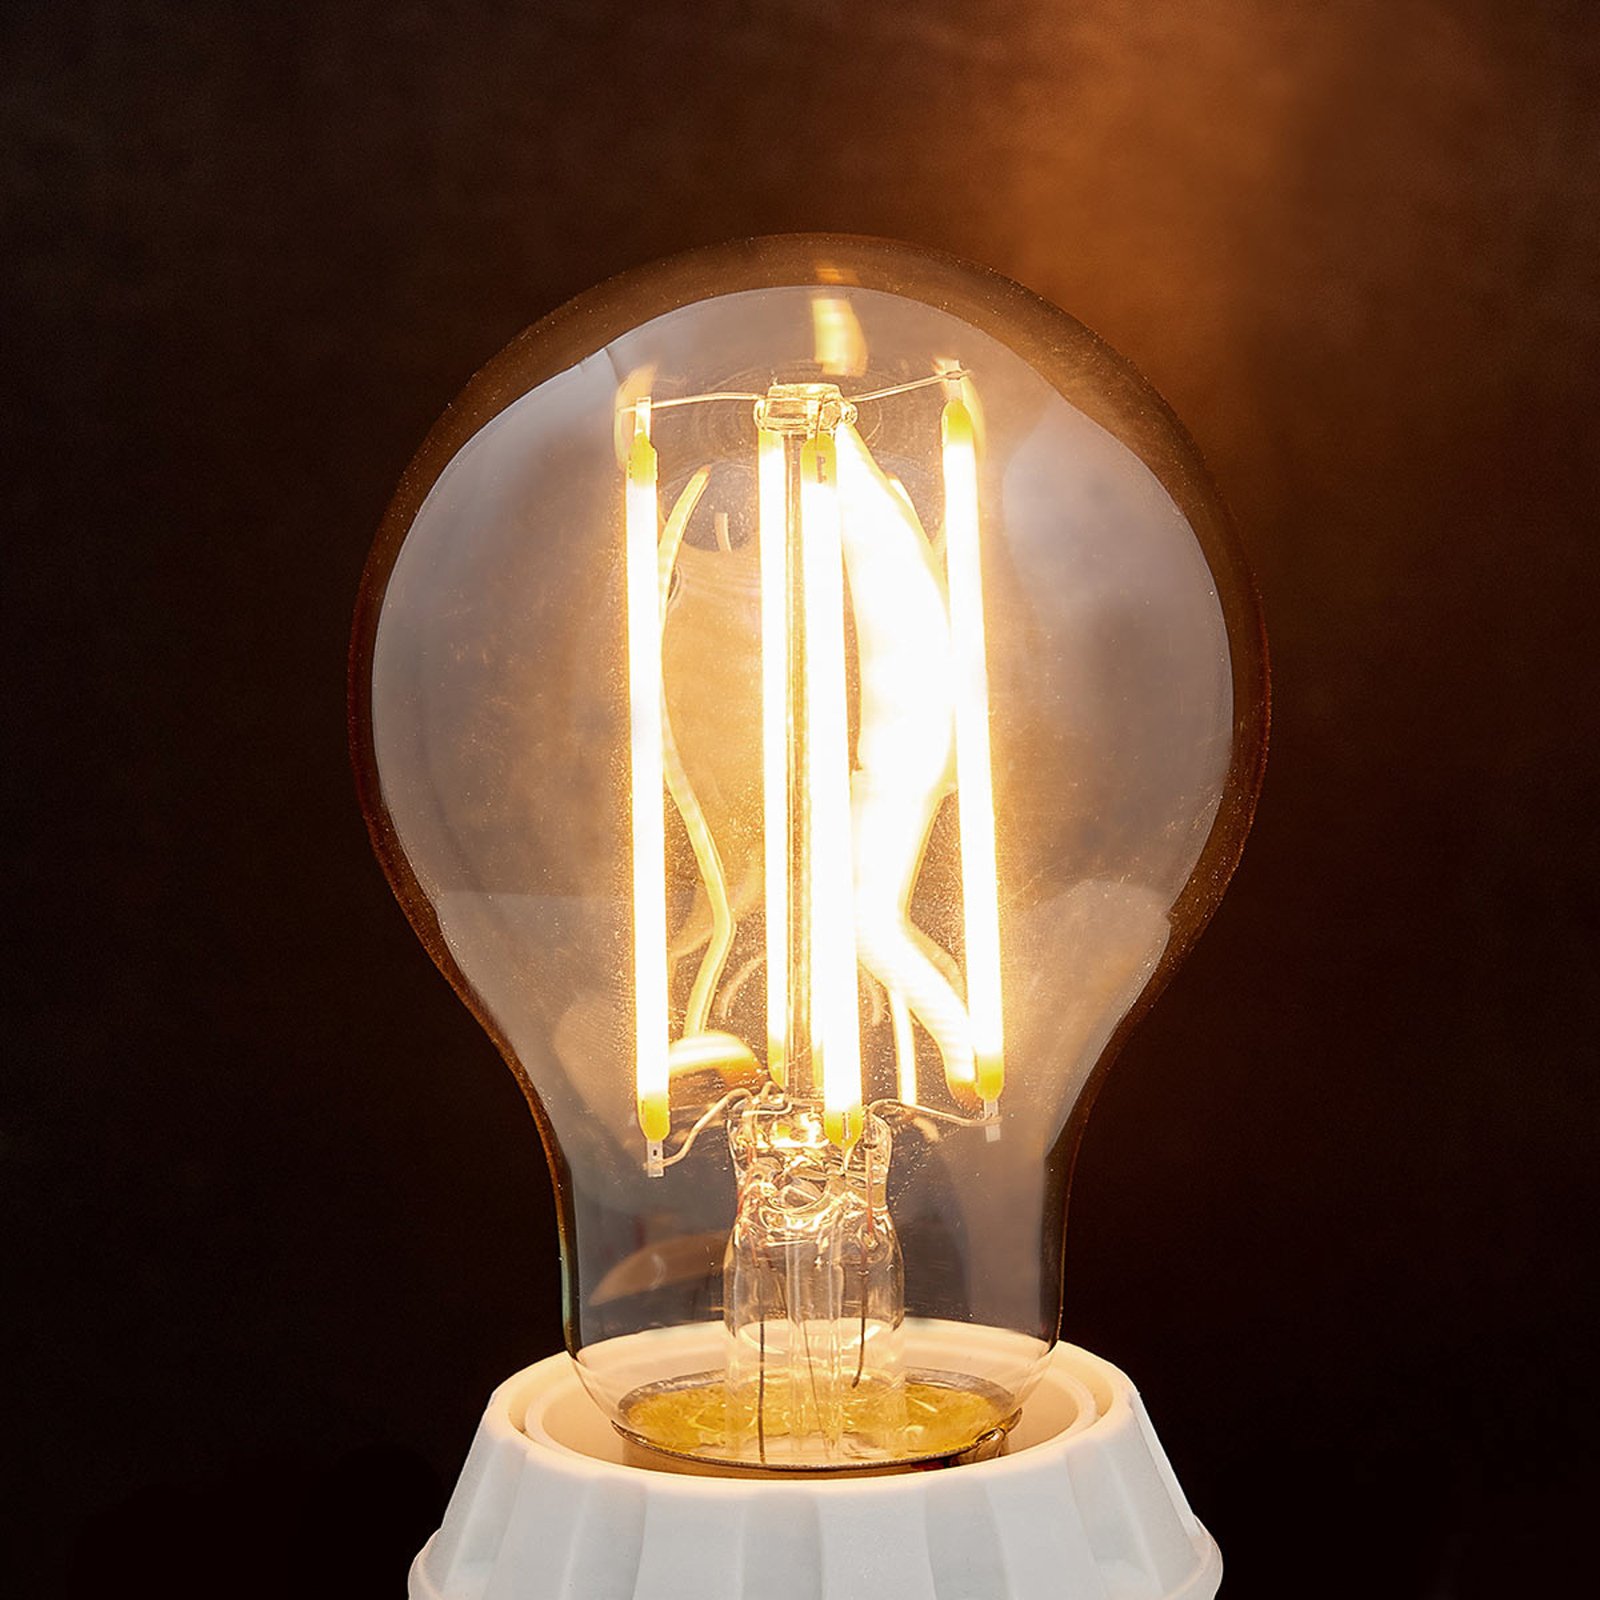 E27 LED-lamppu filament 6W 500 lm, amber, 1 800 K